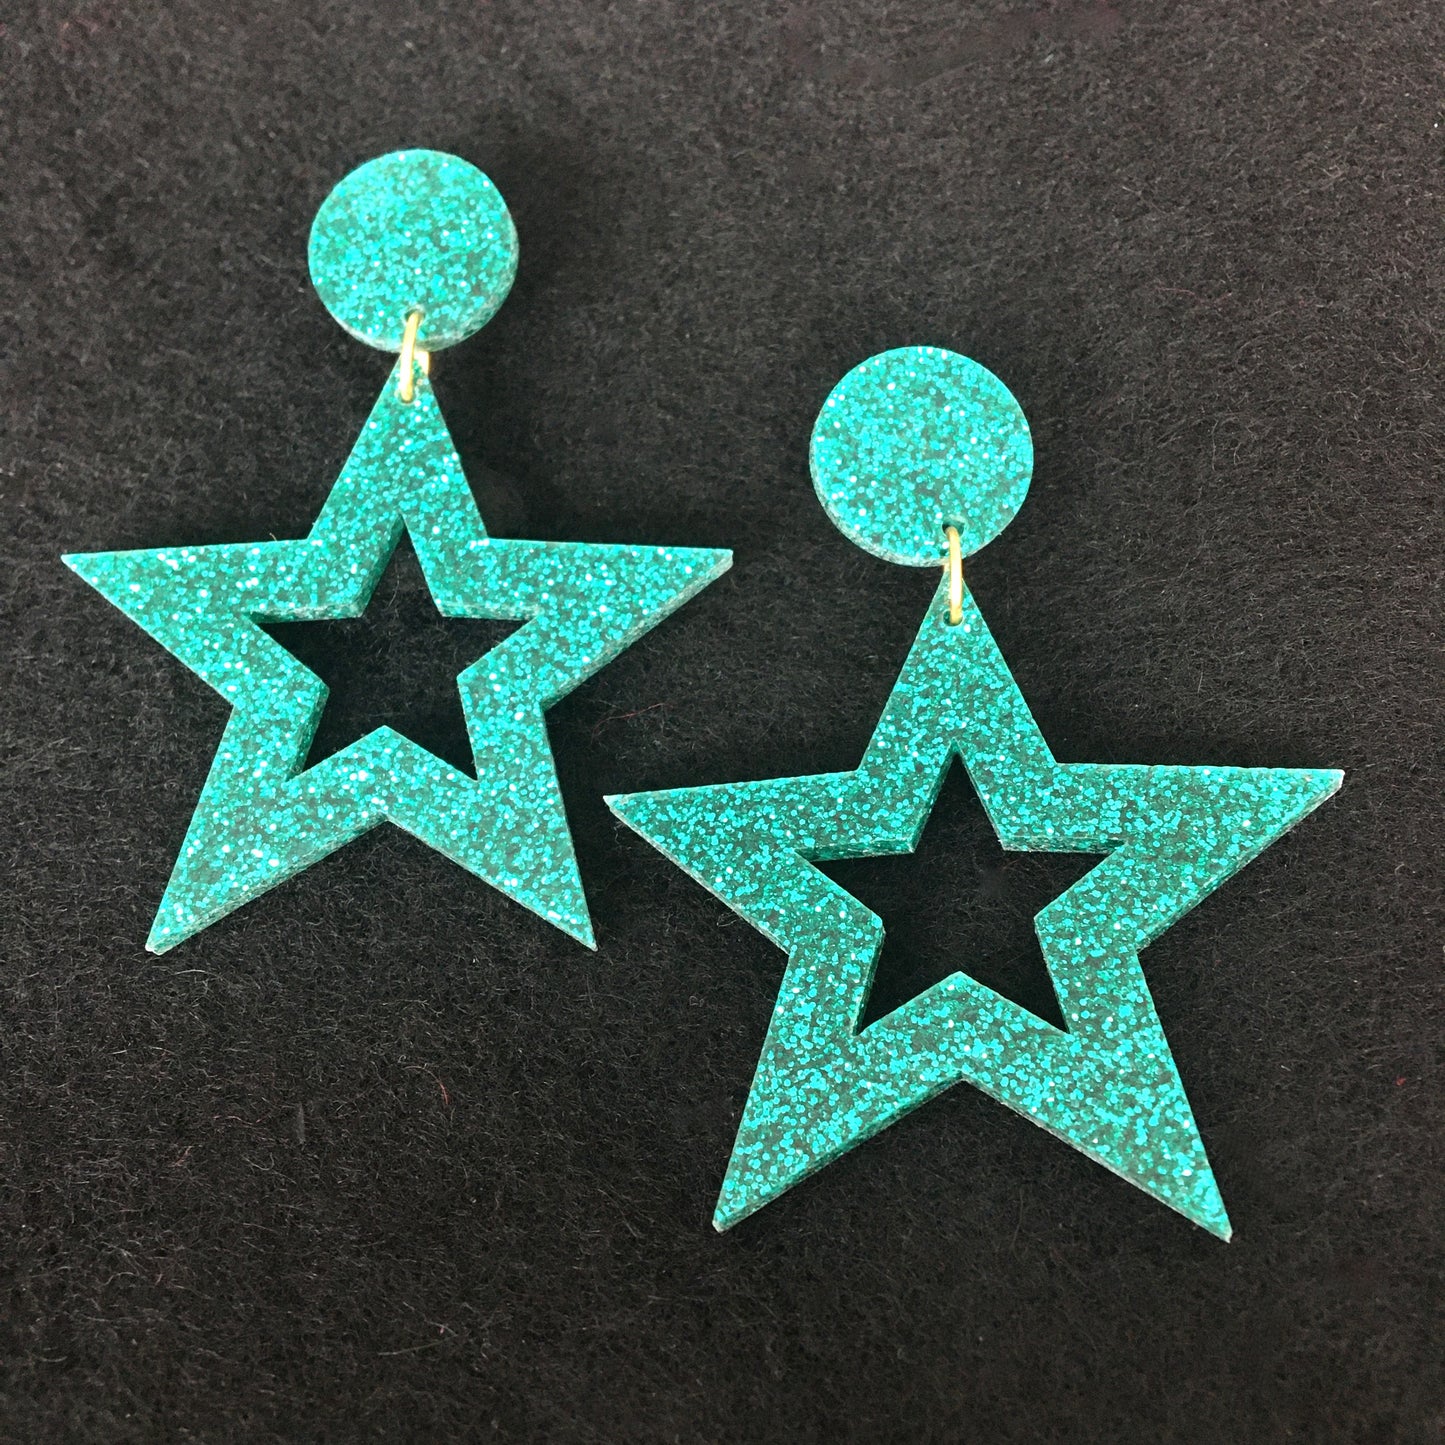 SuperStar Earrings